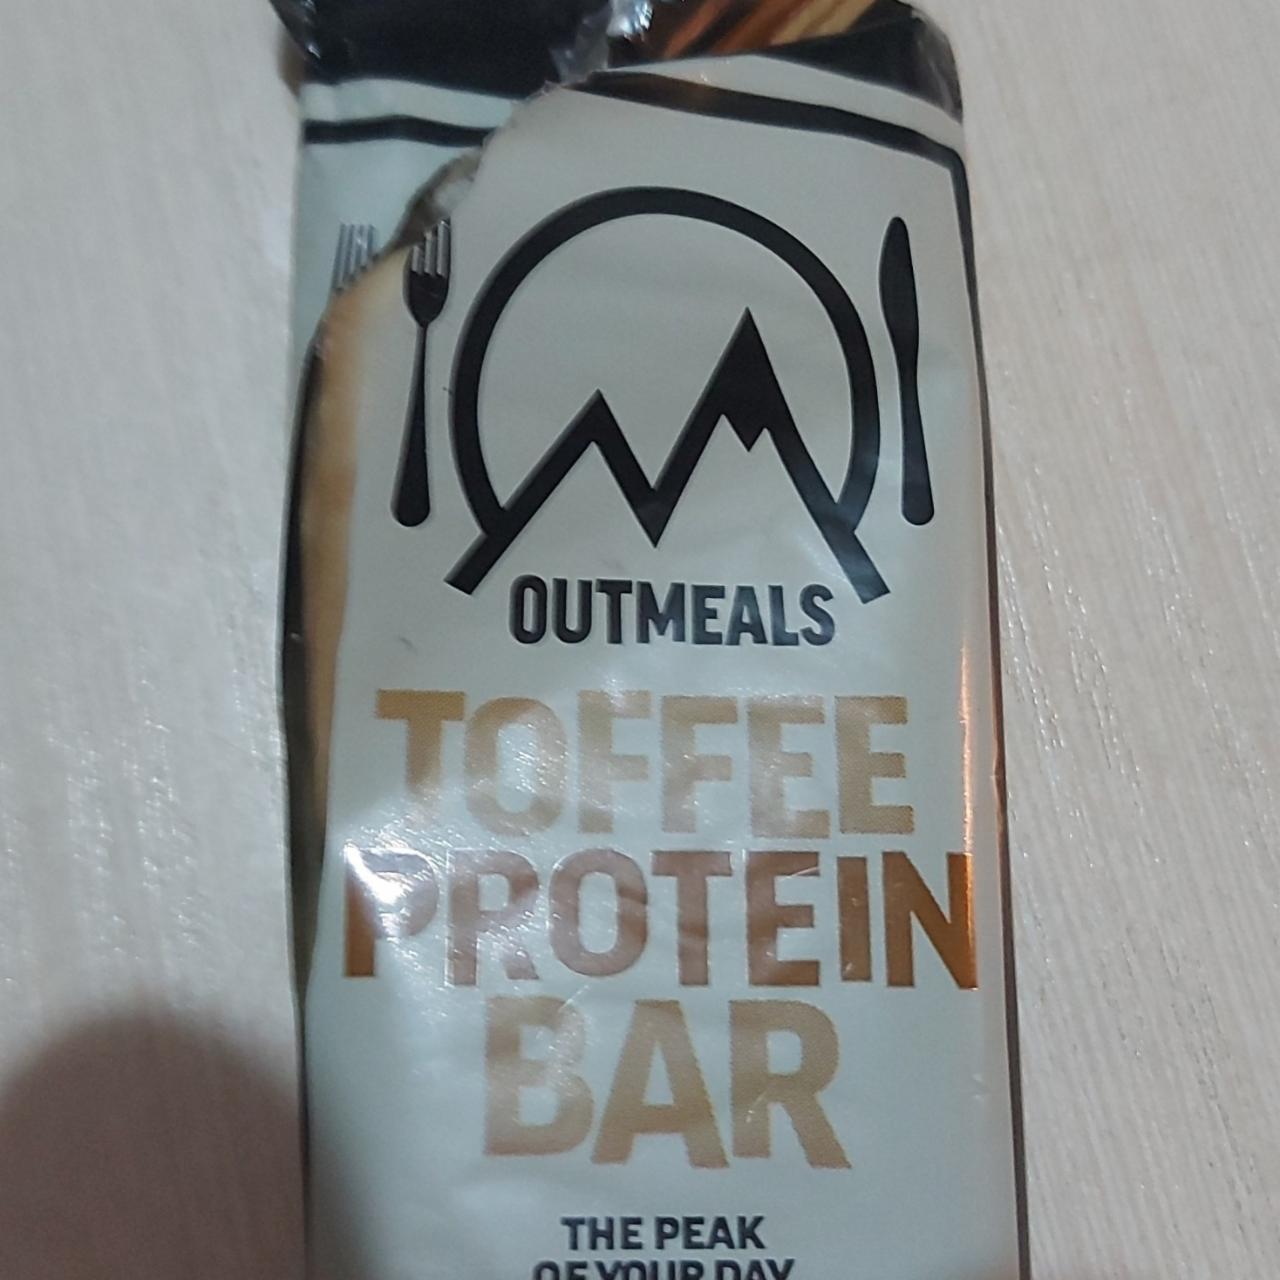 Фото - Батончик протеиновый toffee protein bar Outmeals